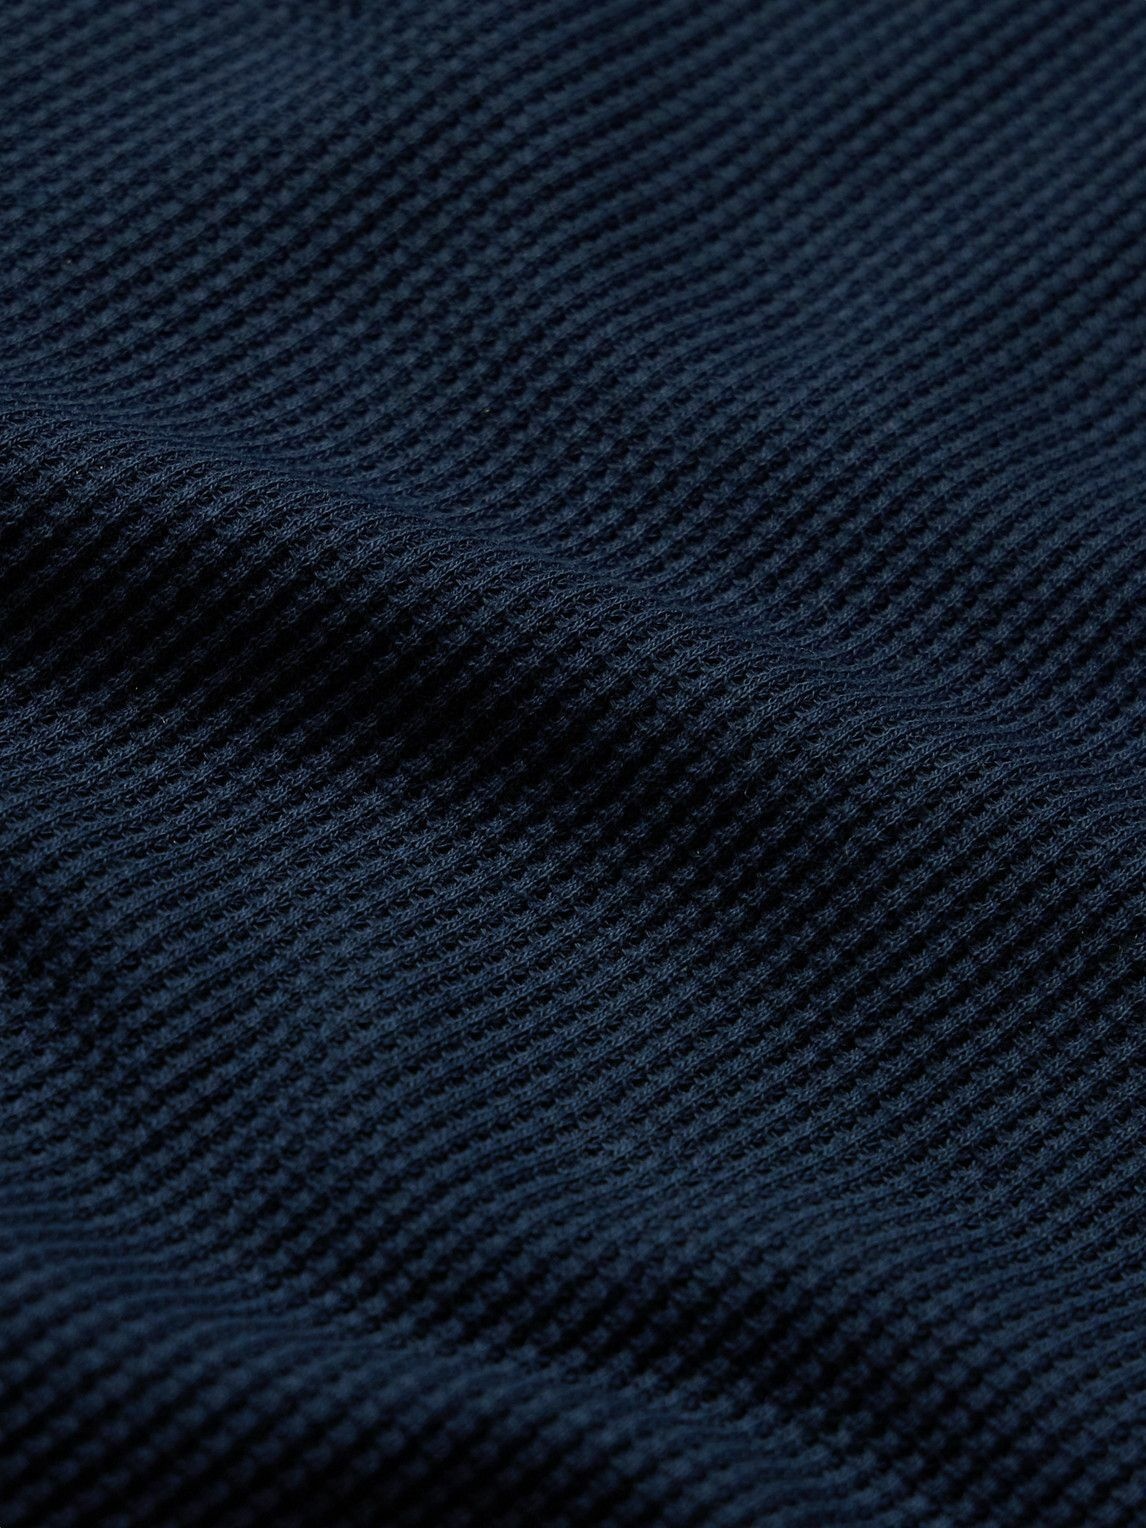 Blue Waffle-knit cotton Henley top, Sunspel